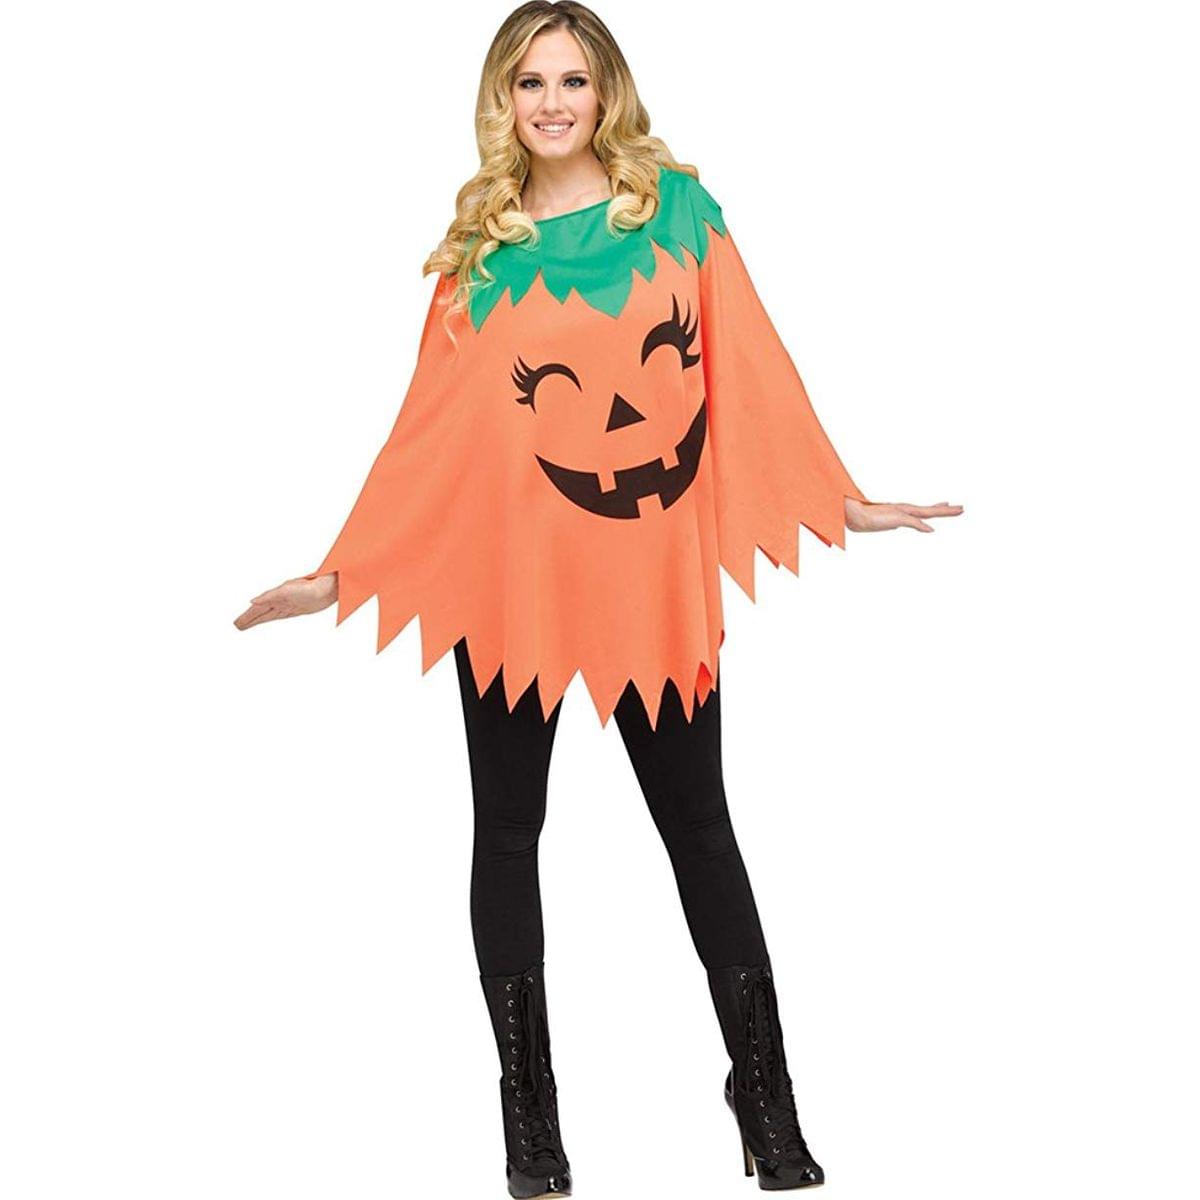 Pumpkin Poncho Women's Costume - One Size 4/14